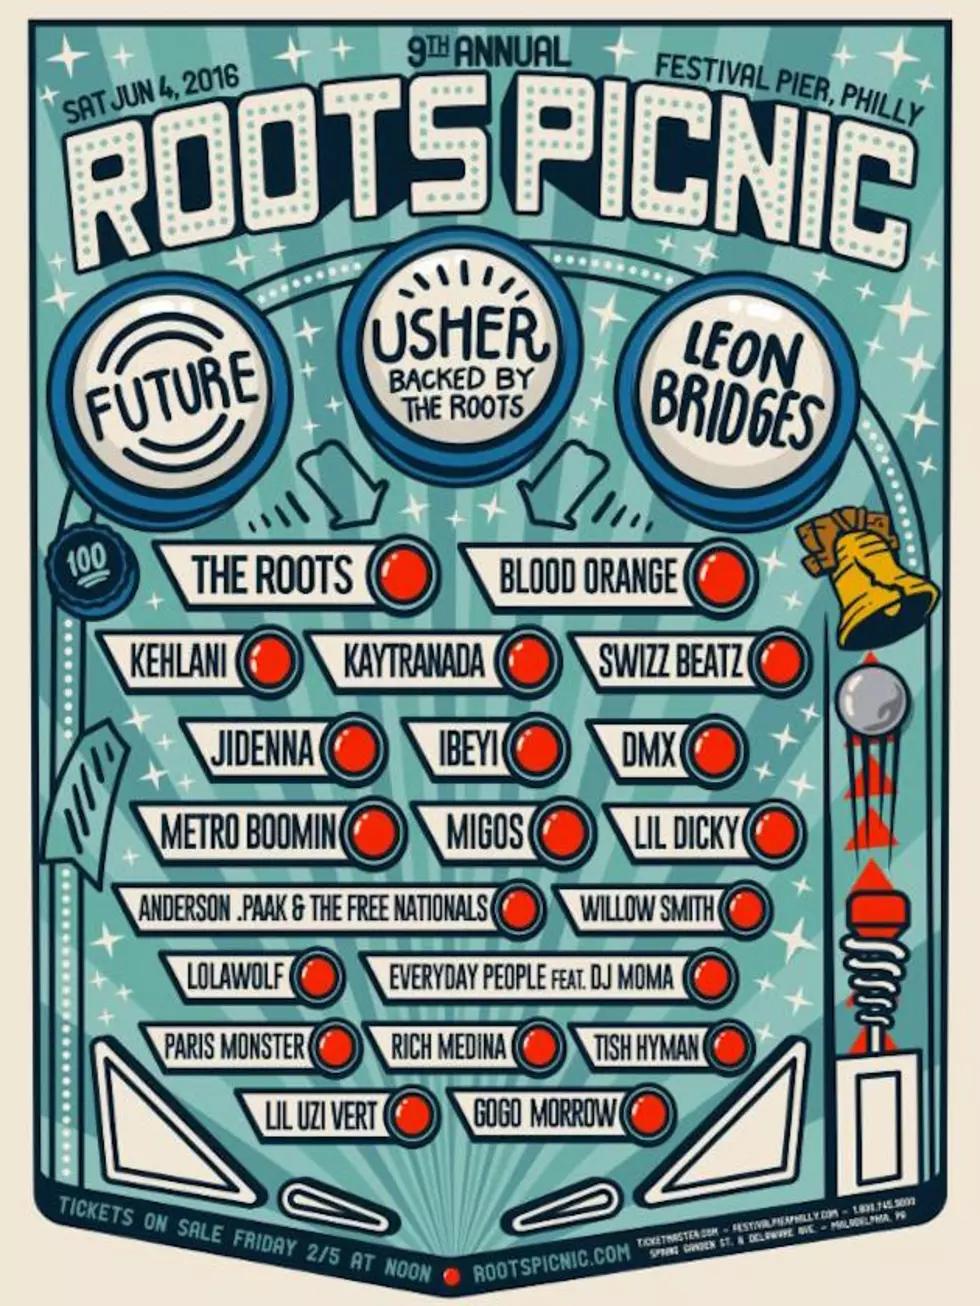 Roots Picnic 2016 Lineup Announced; Future, Usher, Leon Bridges Among Headliners